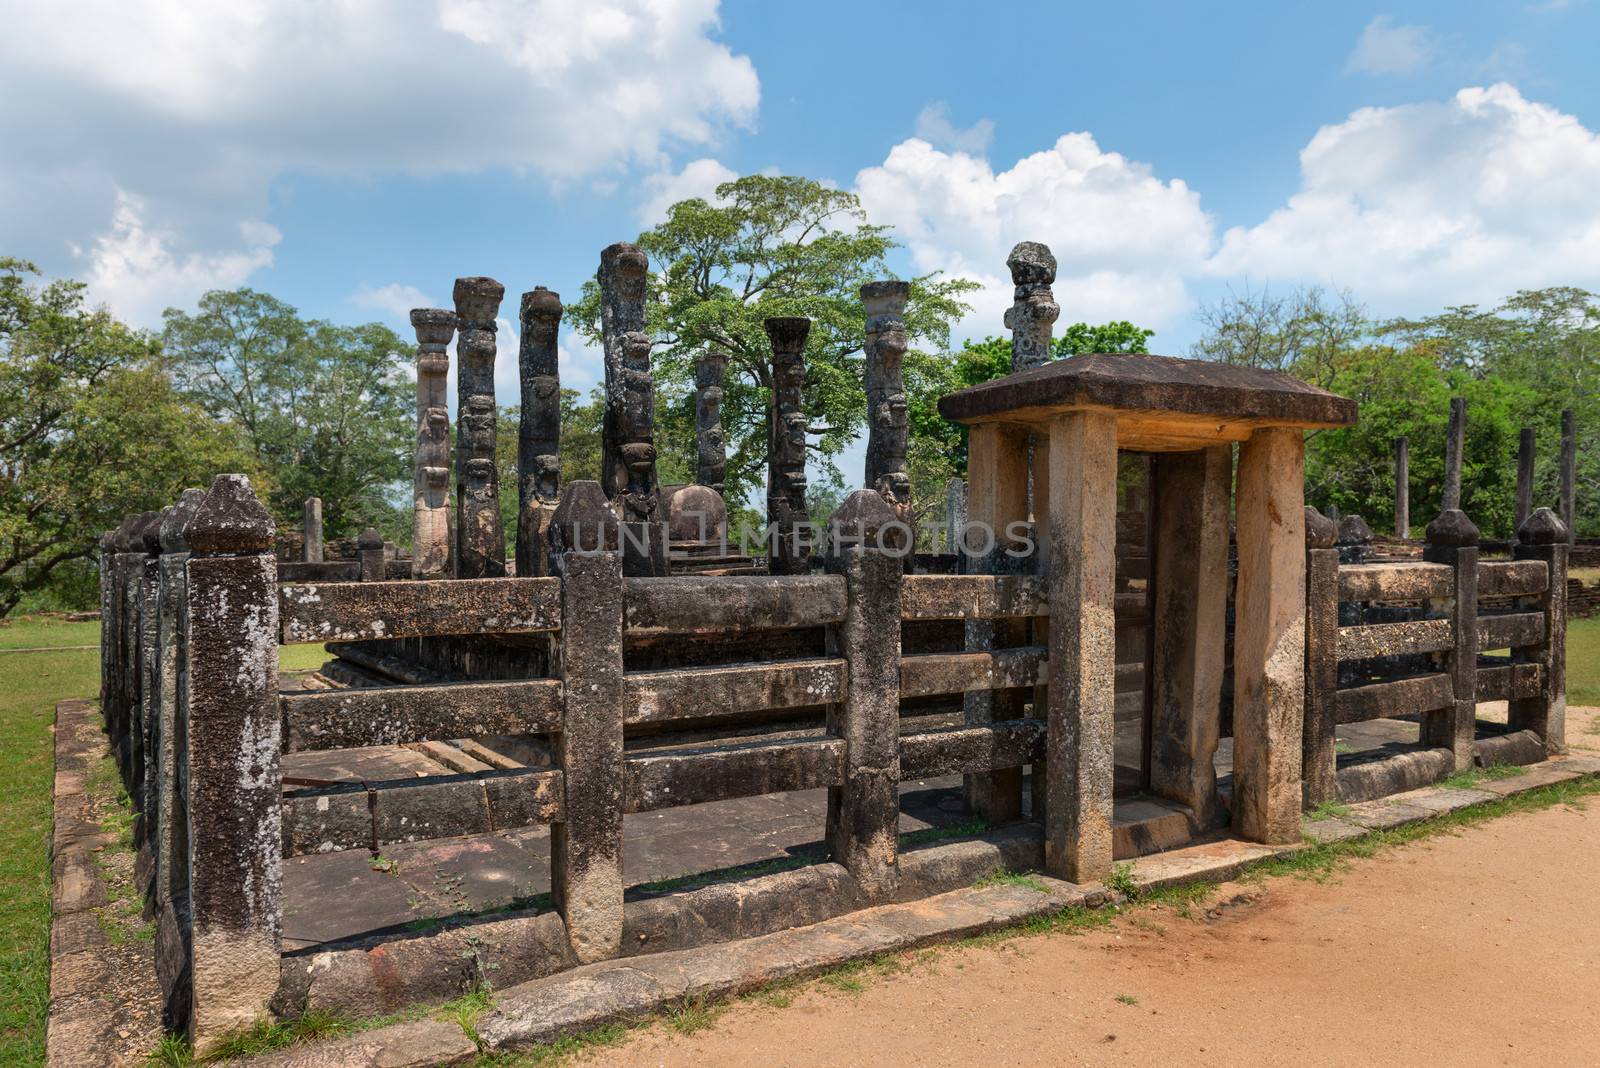 Ancient pavilion with lotus pillars by iryna_rasko